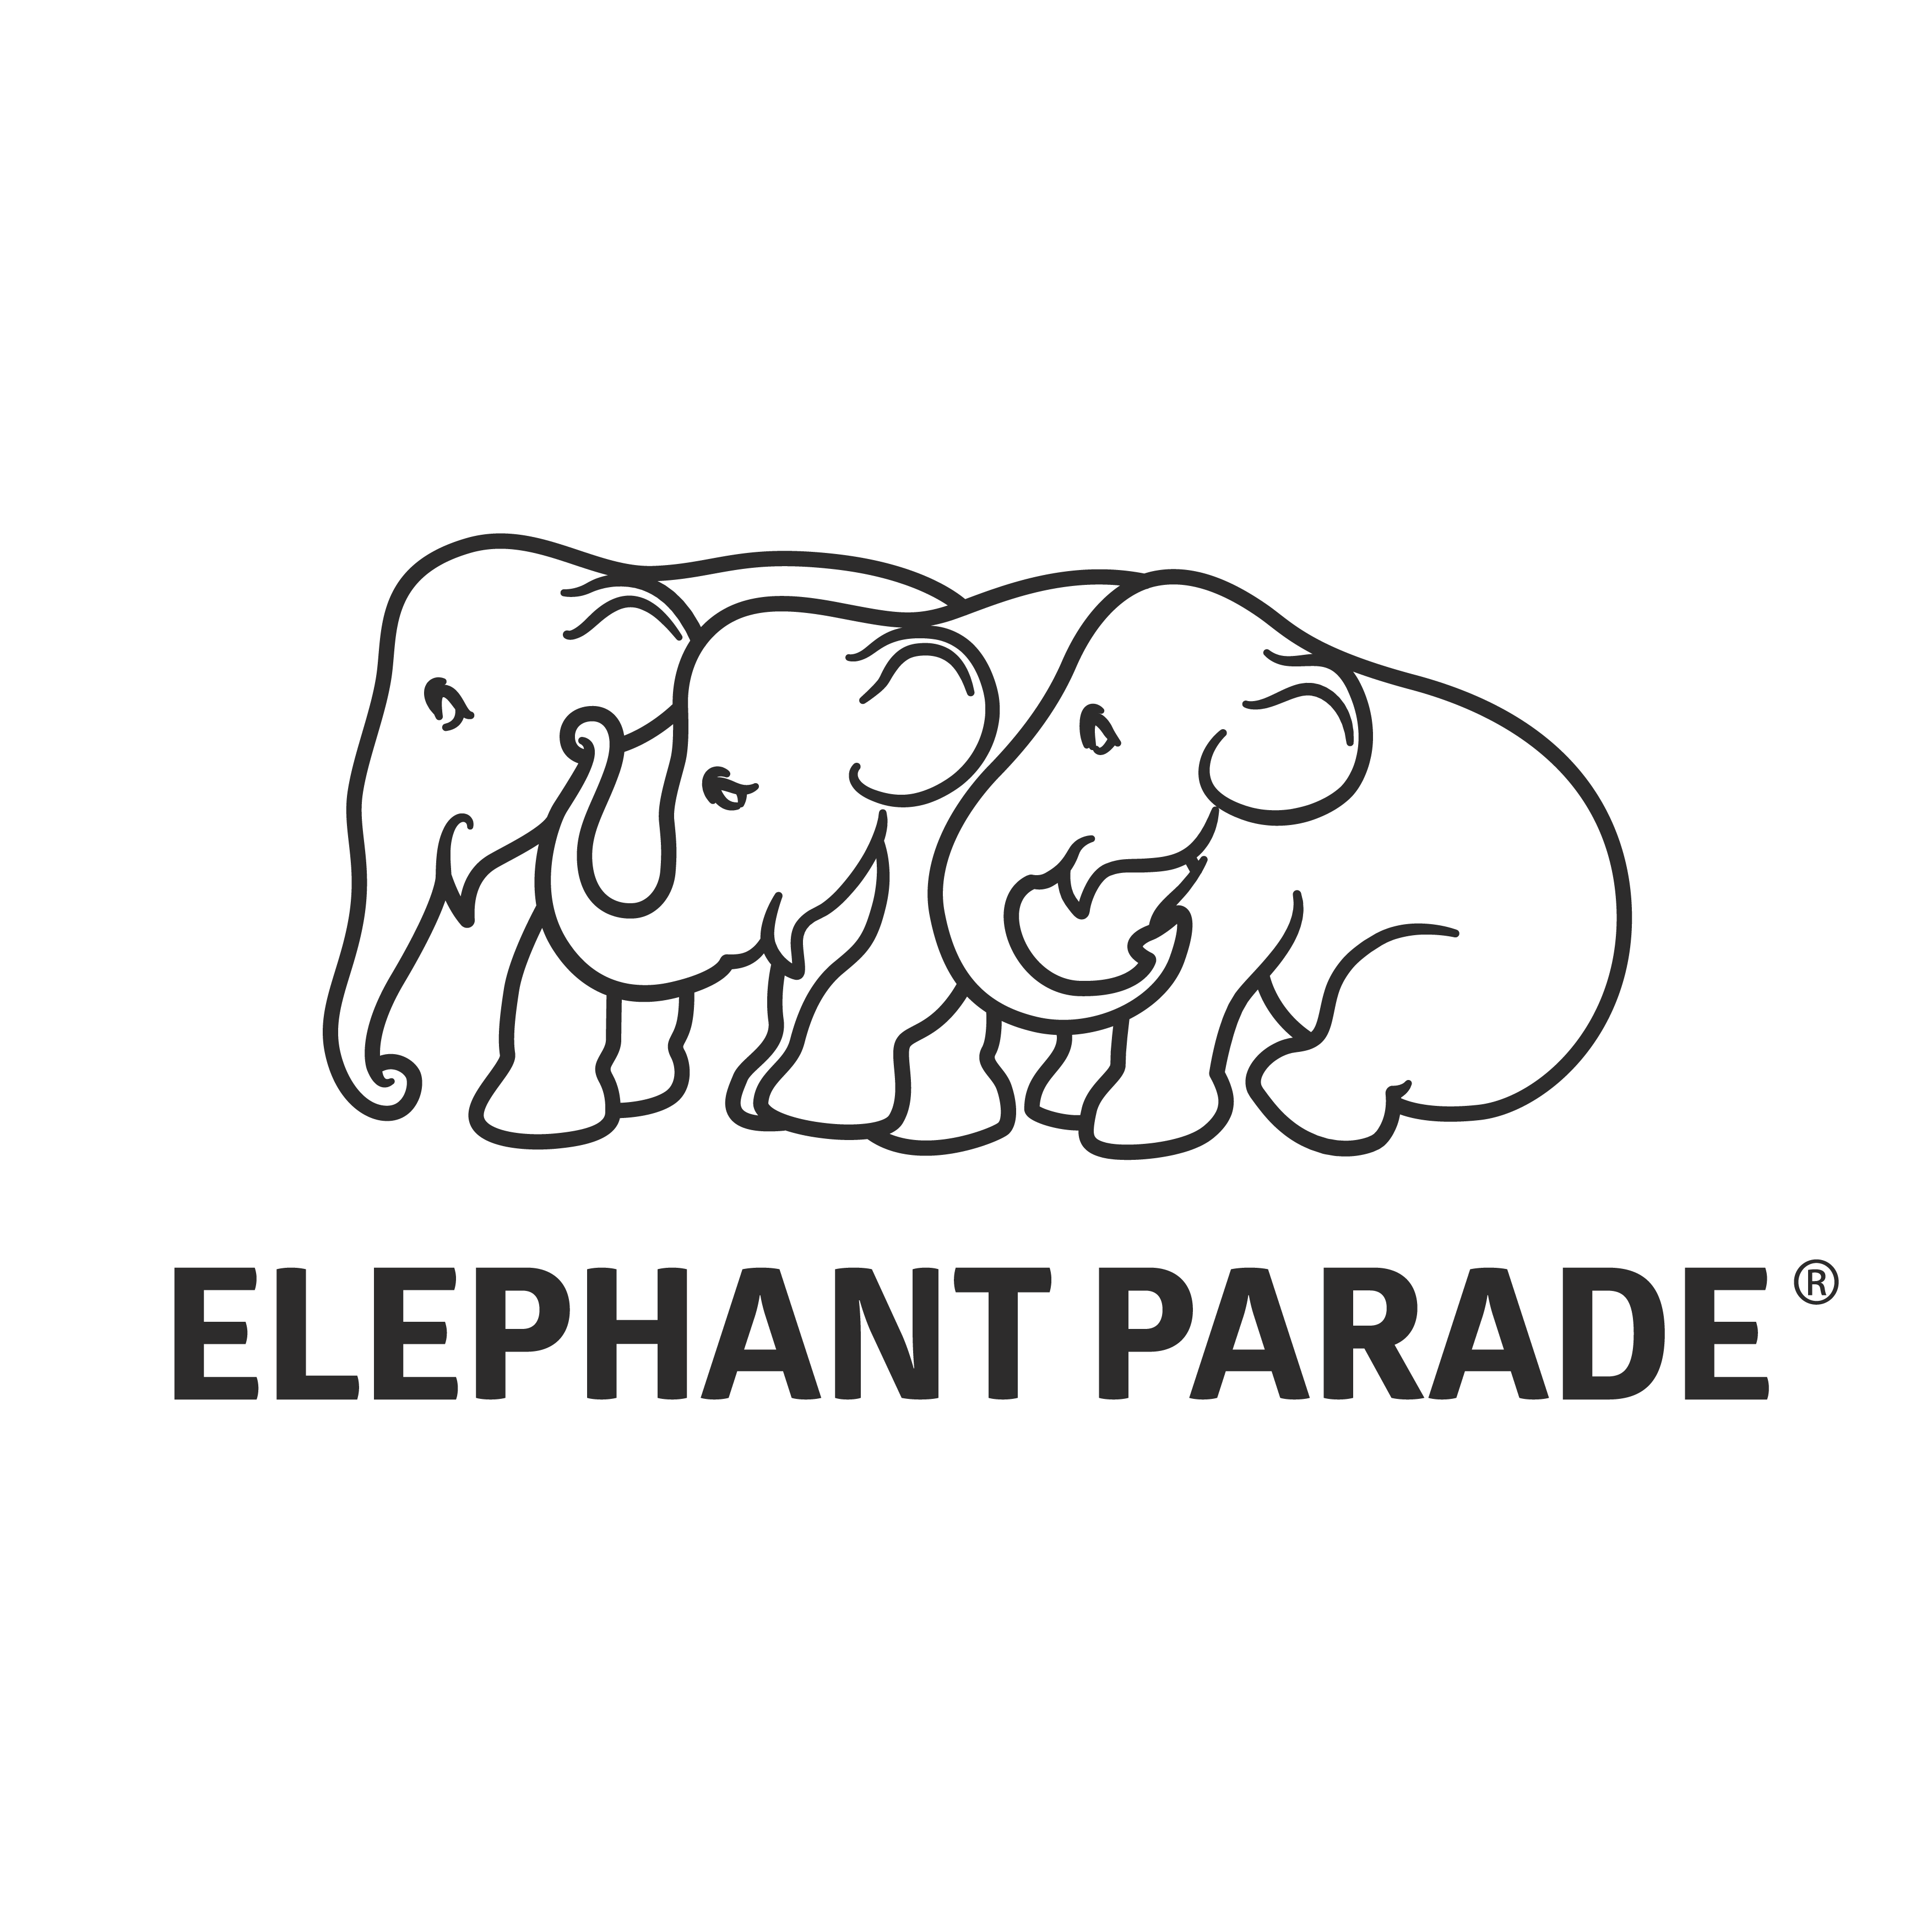 Shop online with ELEPHANT PARADE now! Visit ELEPHANT PARADE on Lazada.